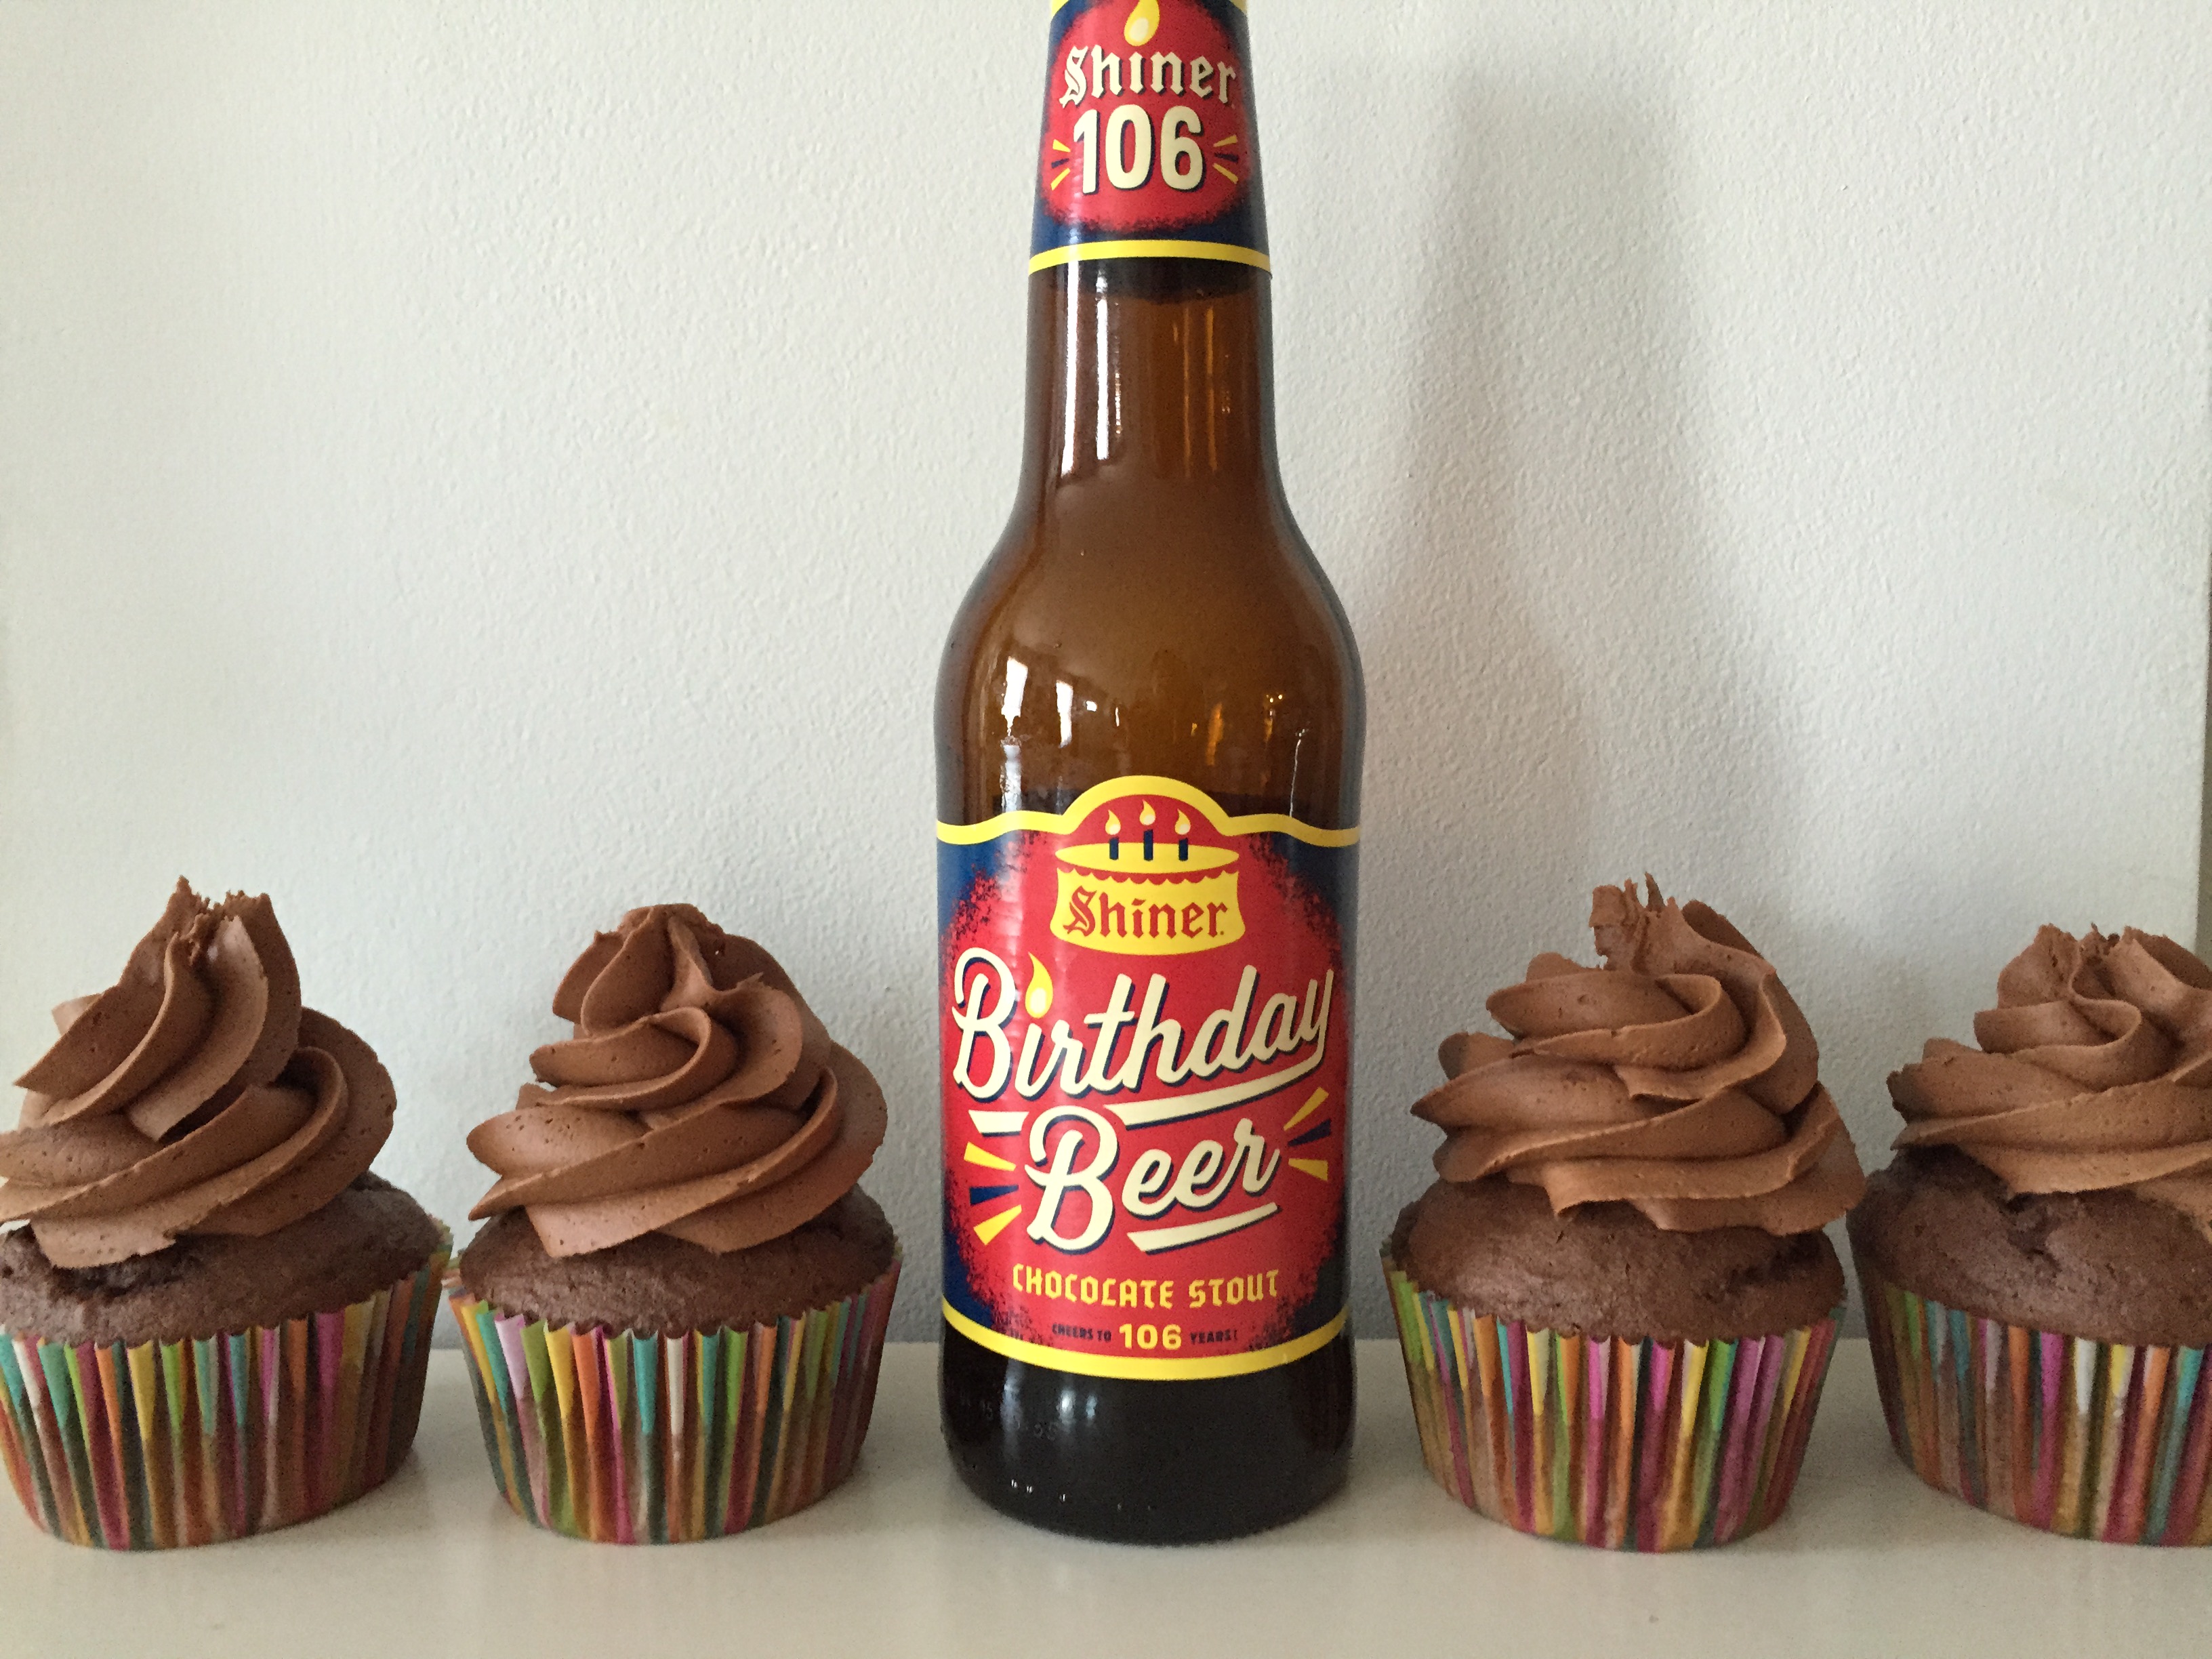 Beer Birthday Cake and Cupcake